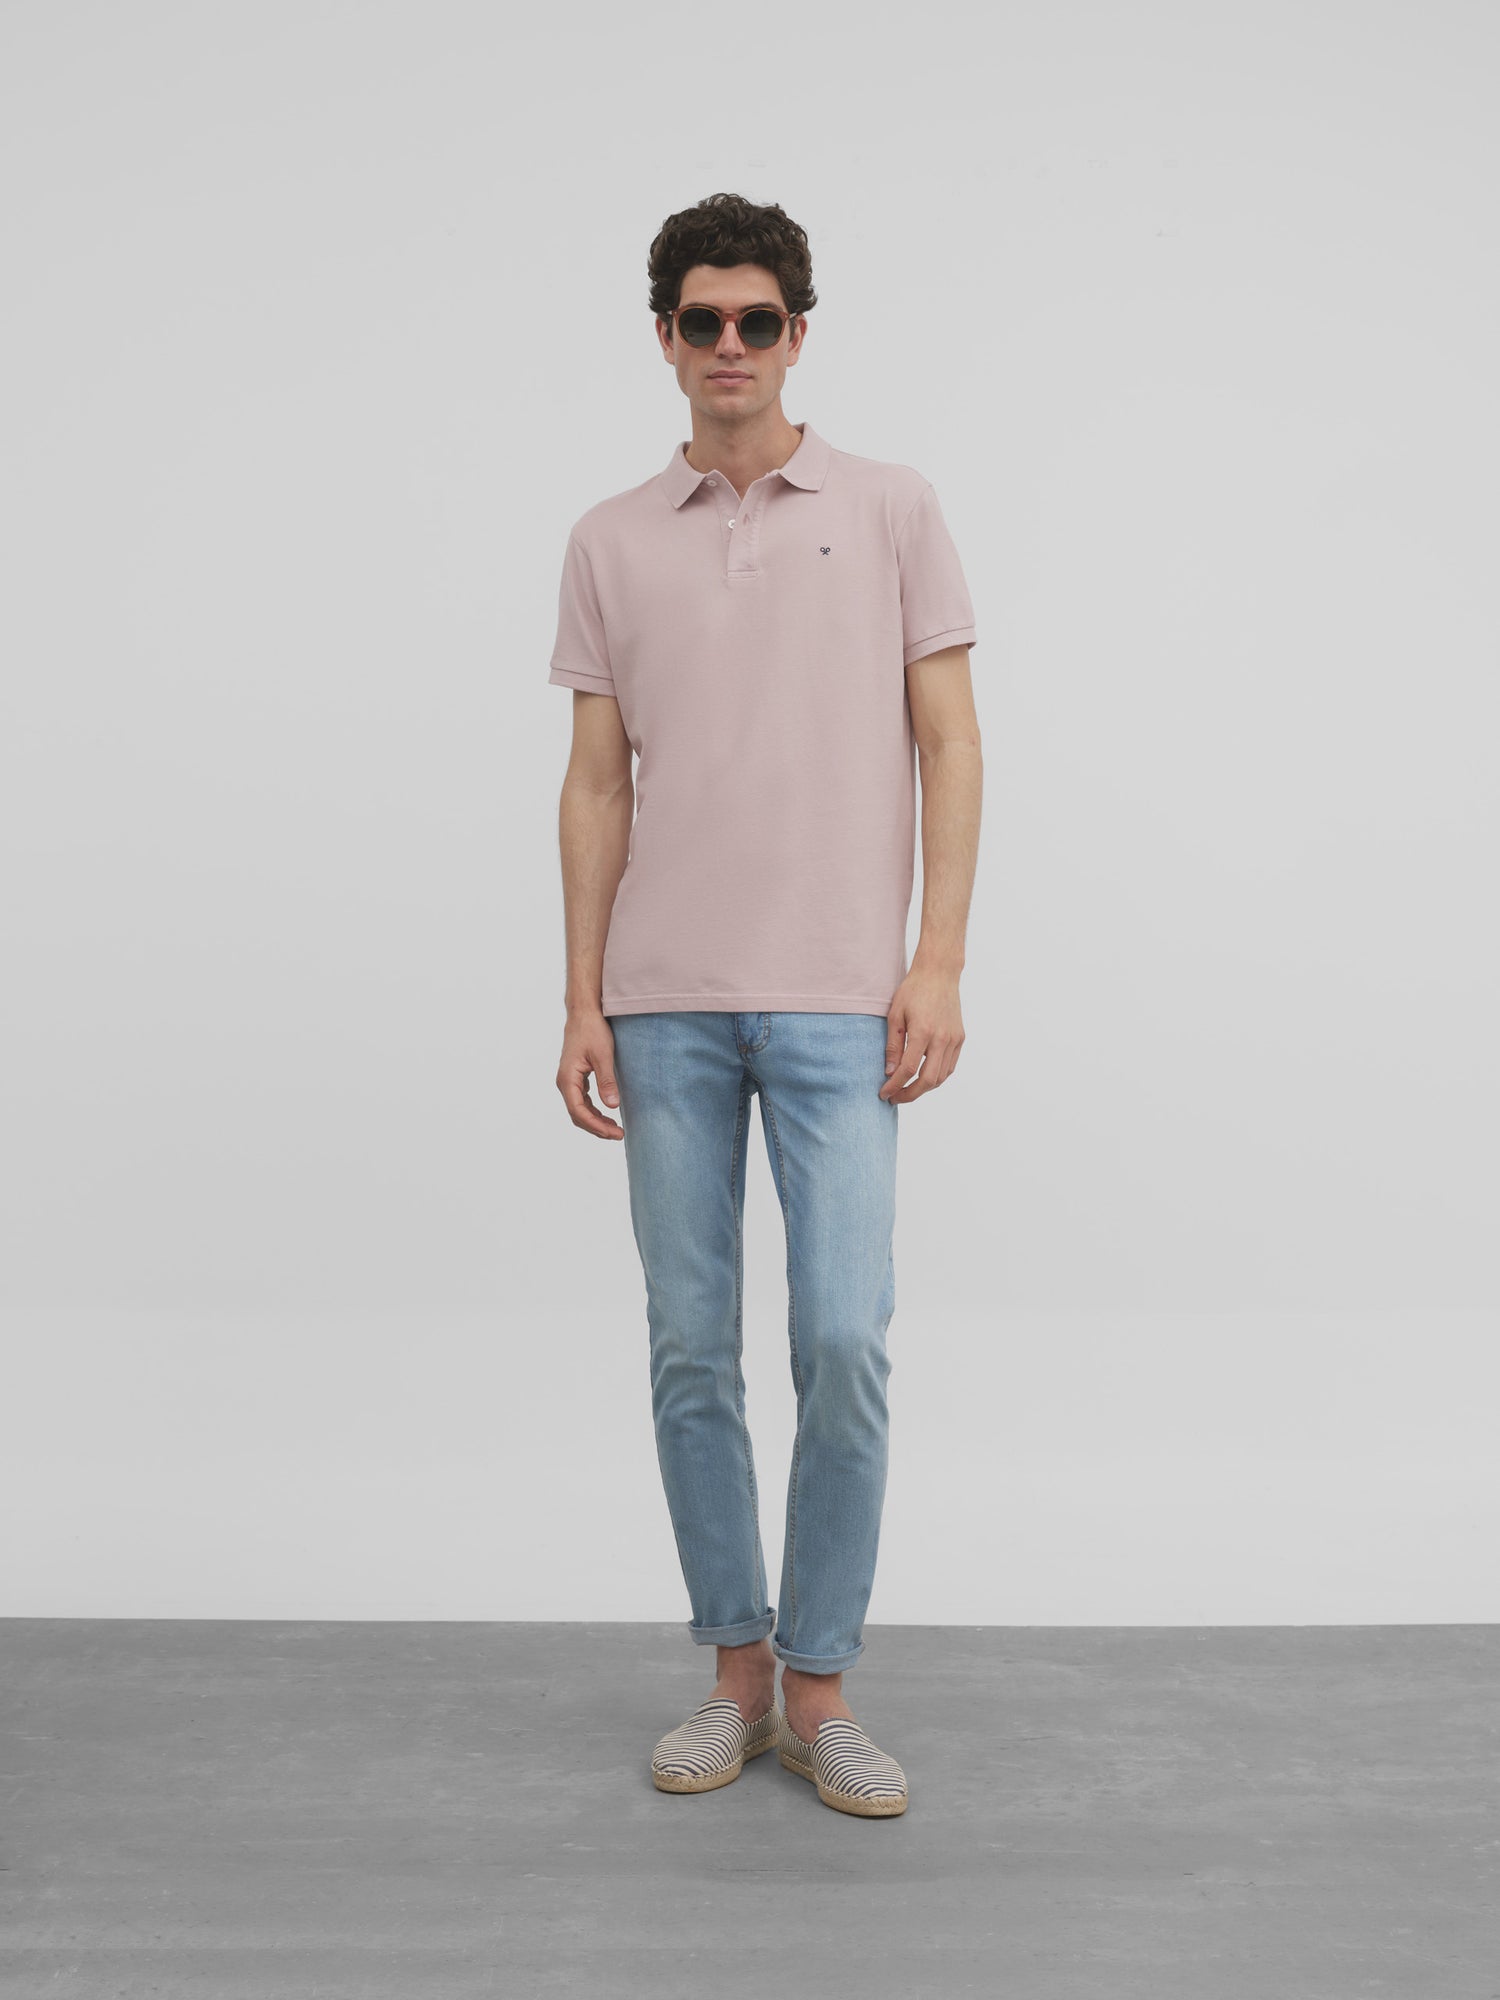 Classic plain light pink polo shirt